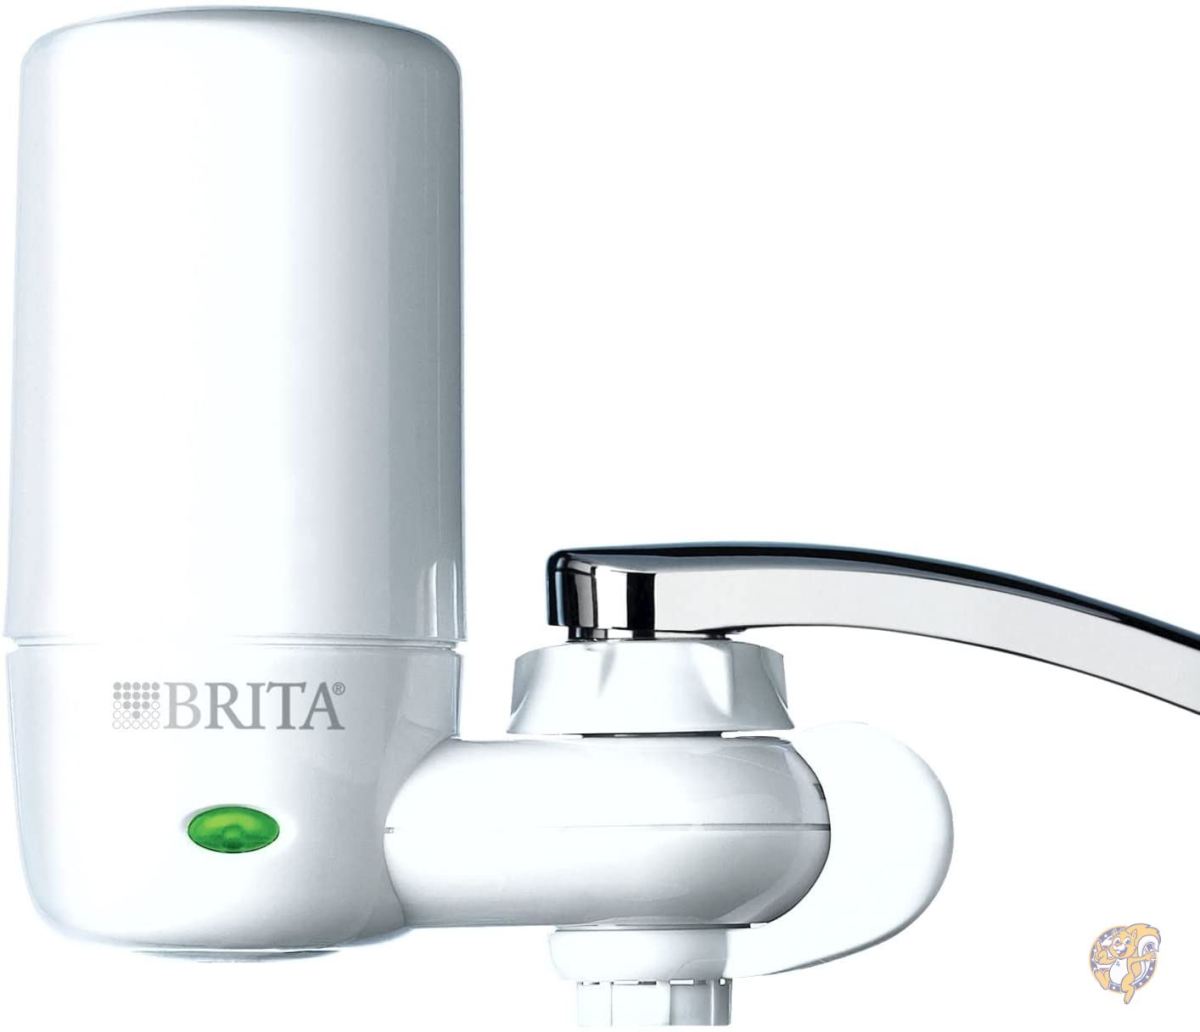 Brita Div of Clorox42201Brita On Tap System Faucet Water Filter-ON TAP SYSTEM (並行輸入品) 送料無料